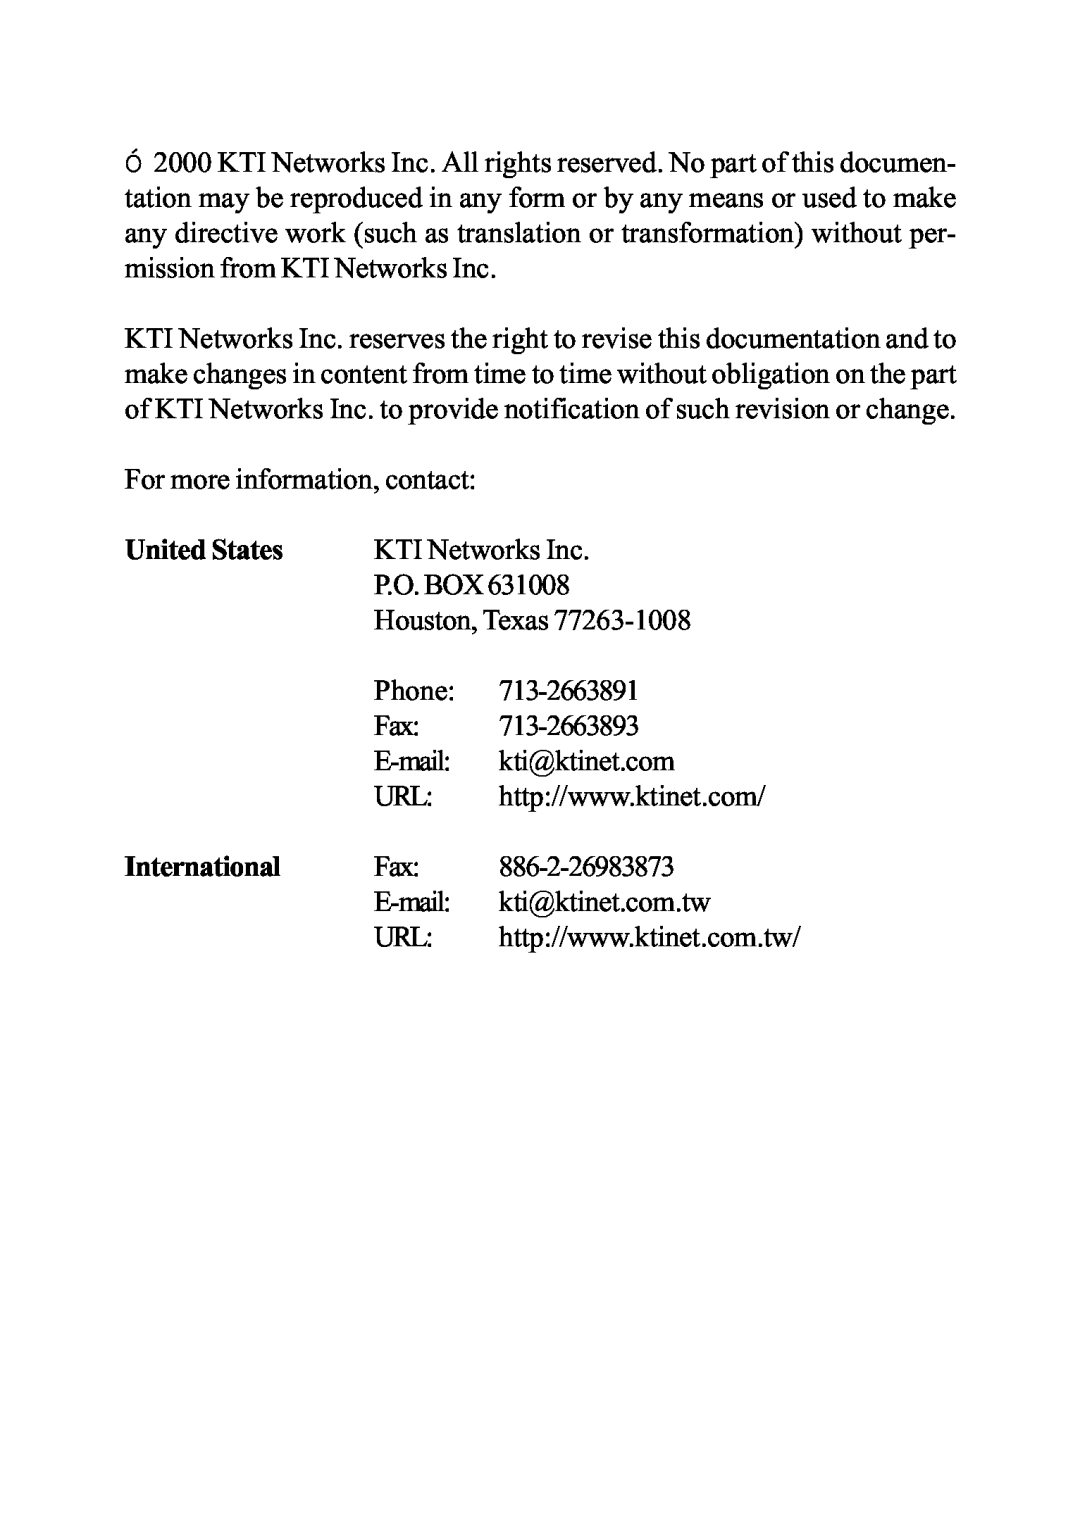 KTI Networks KS-801 manual 